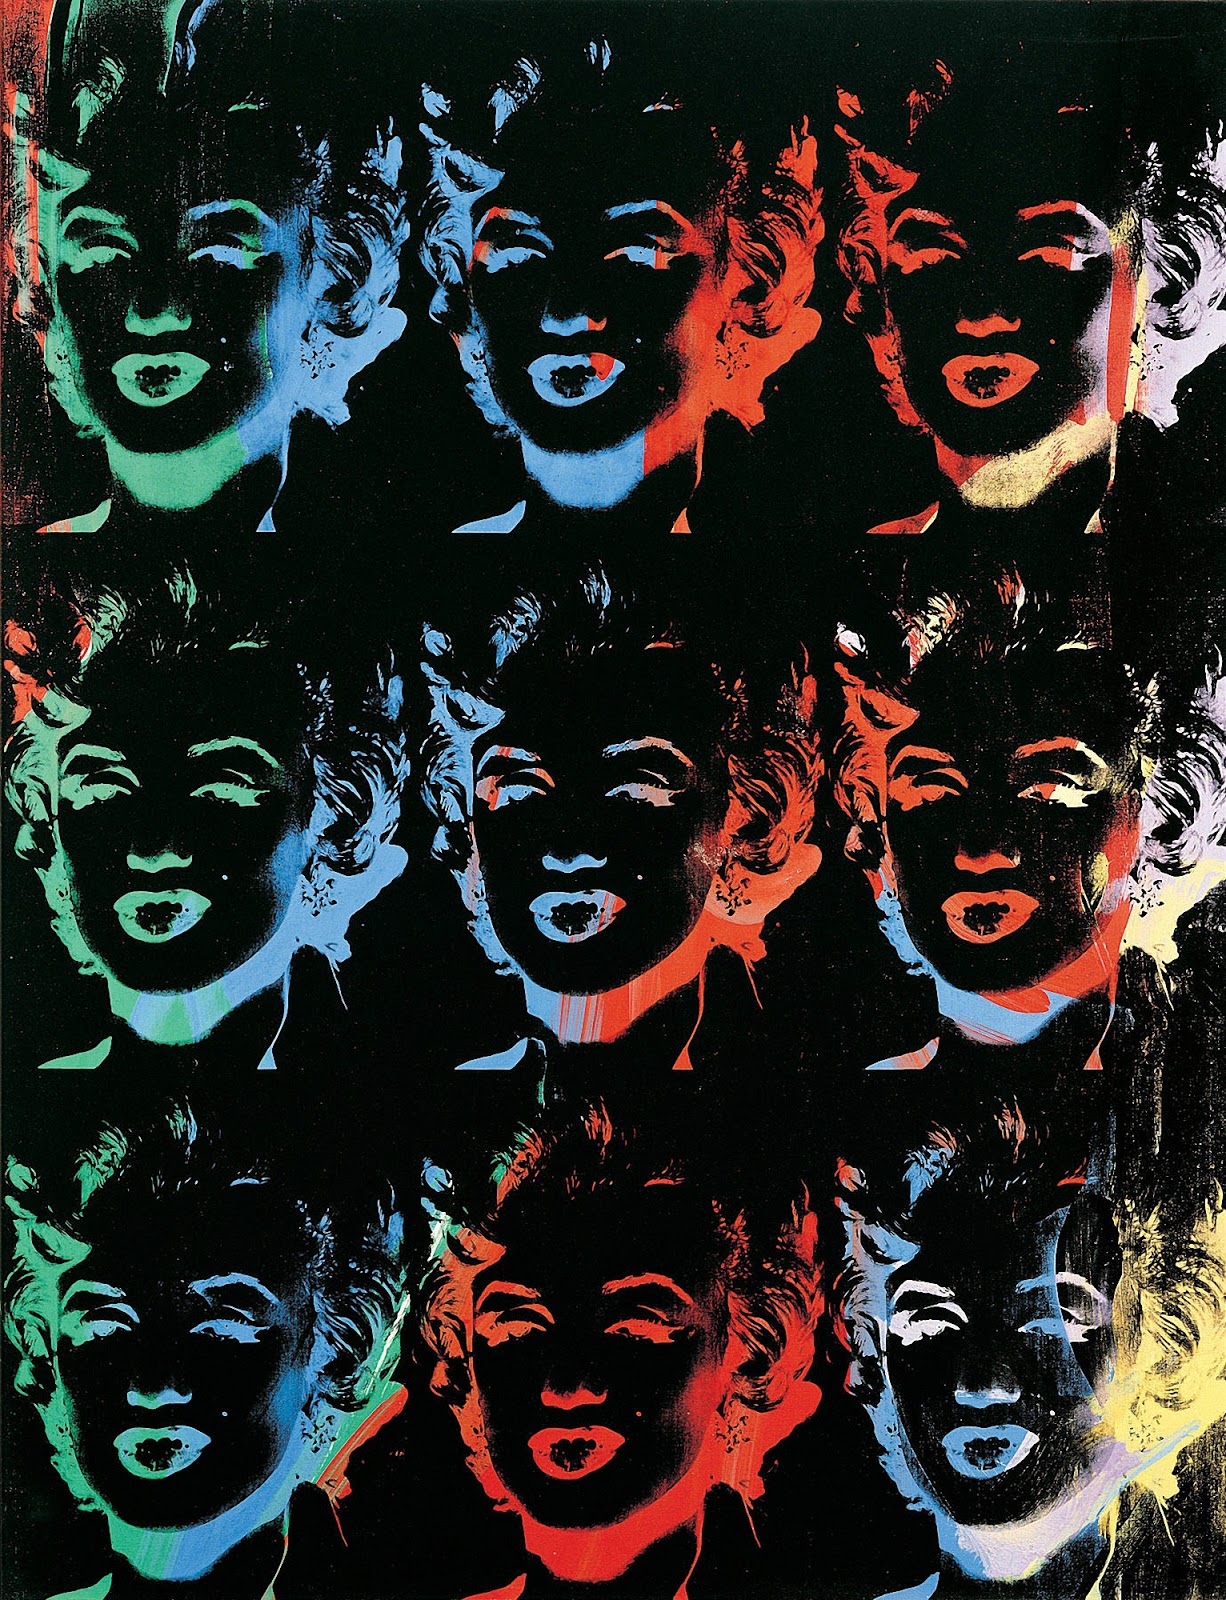 Andy+Warhol-1928-1987 (126).jpg